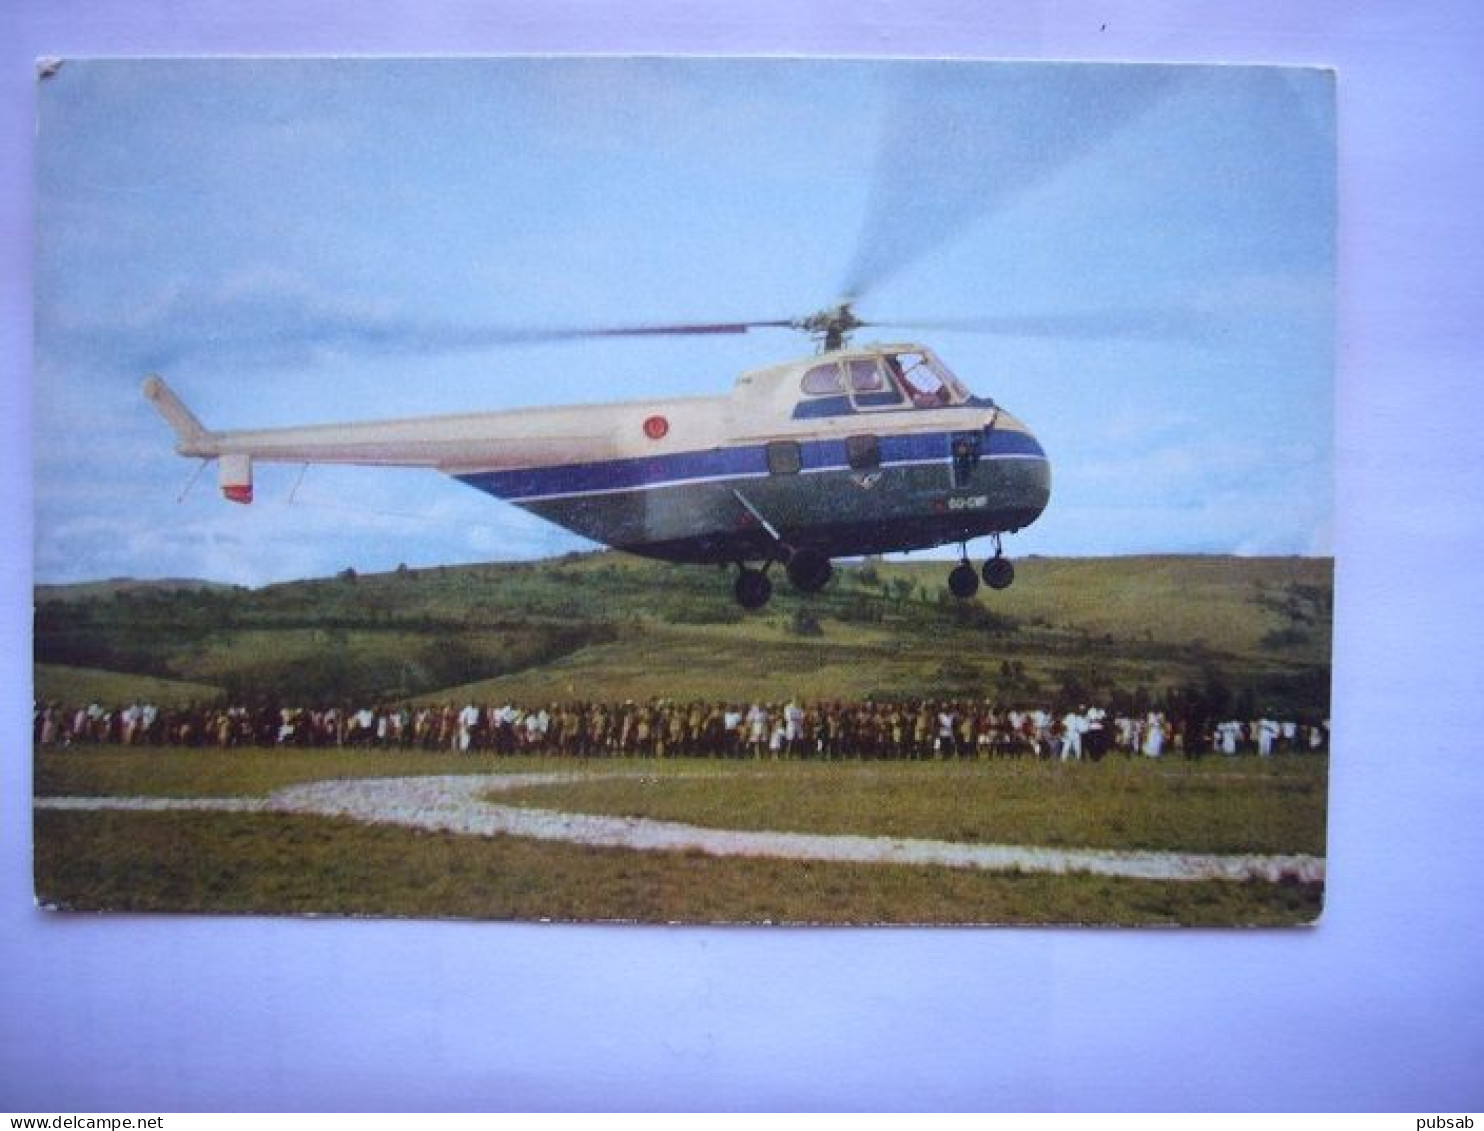 Avion / Airplane / SABENA / Helicopter / Sikorsky S-55 / OO-CWF / Seen At Kitega, Rwanda - Hélicoptères